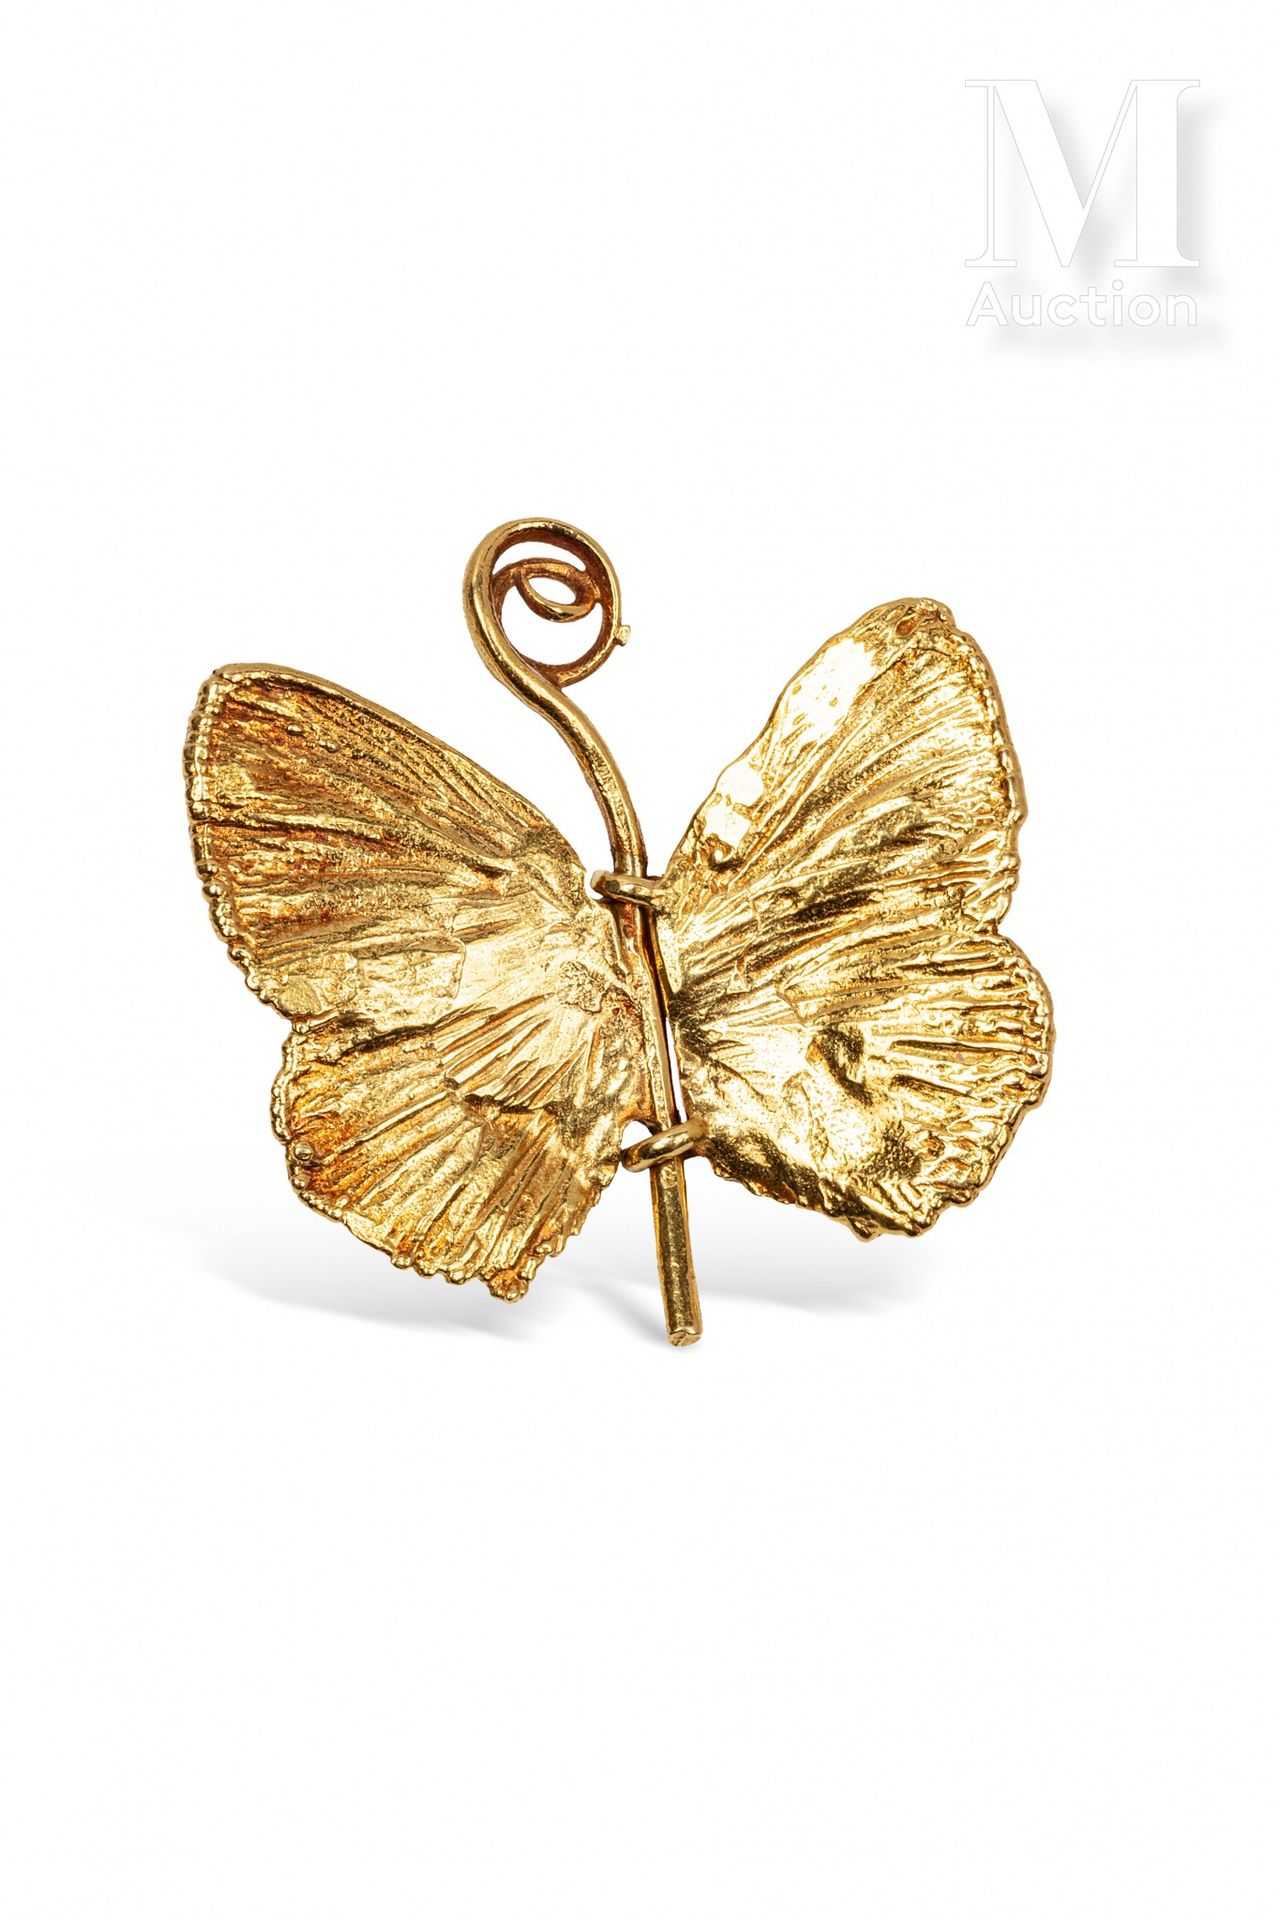 Claude LALANNE (1925 - 2019) "蝴蝶

18K金的耳环。

Artcurial出版社。

编号为29 / 30和菱形标志。

毛重 &hellip;